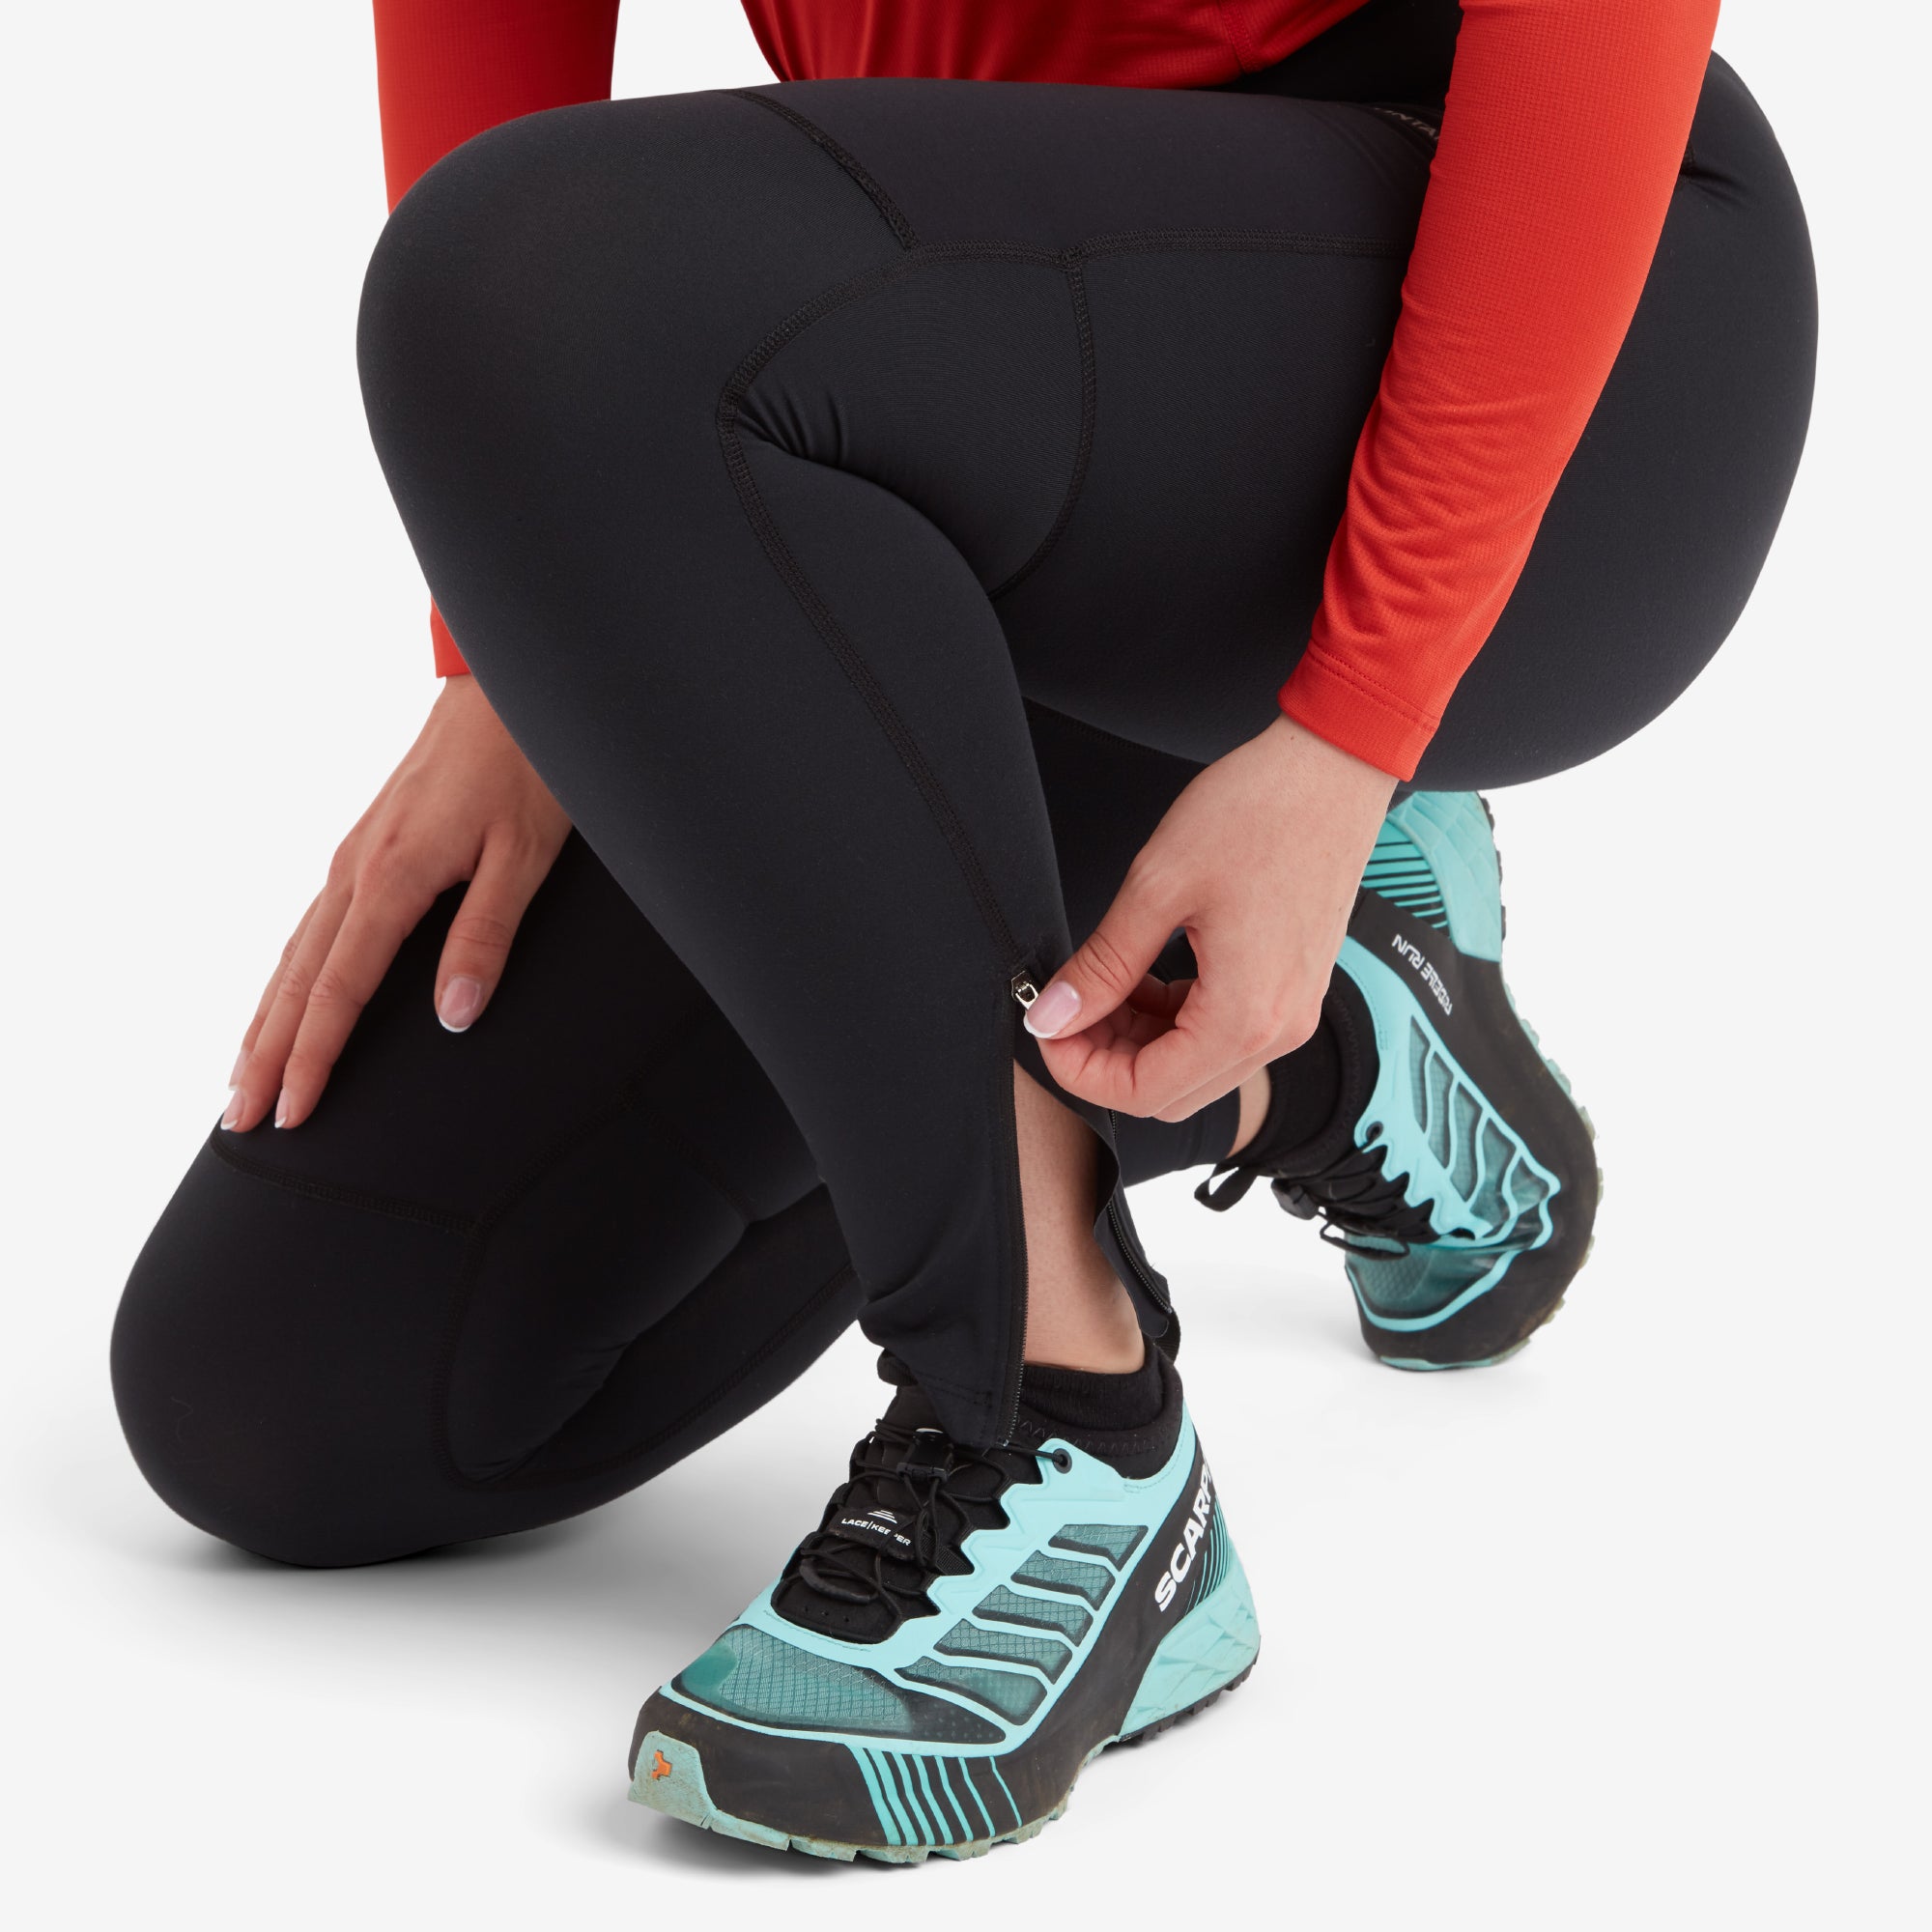 Women's Thermal Leggings & Tights. Running Bare Flex Pocket Tight.